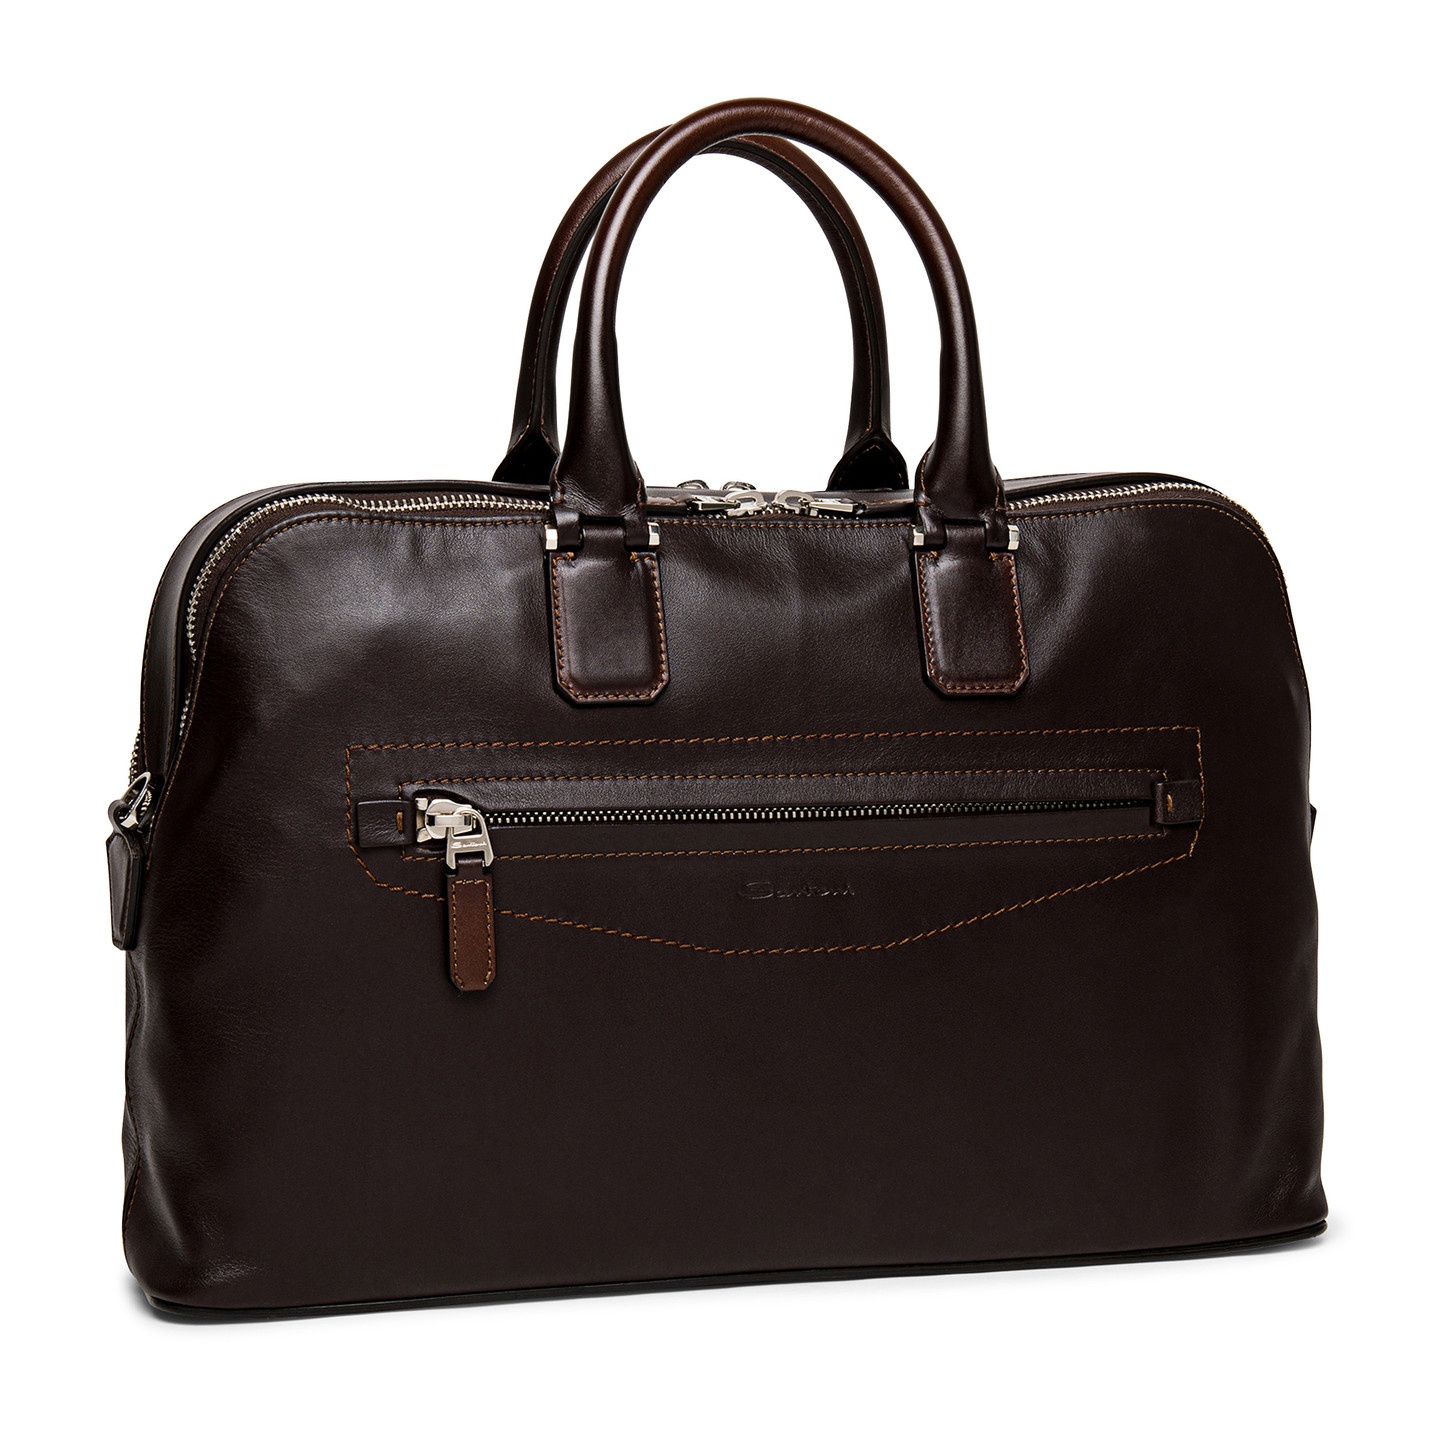 Brown leather laptop bag - 4